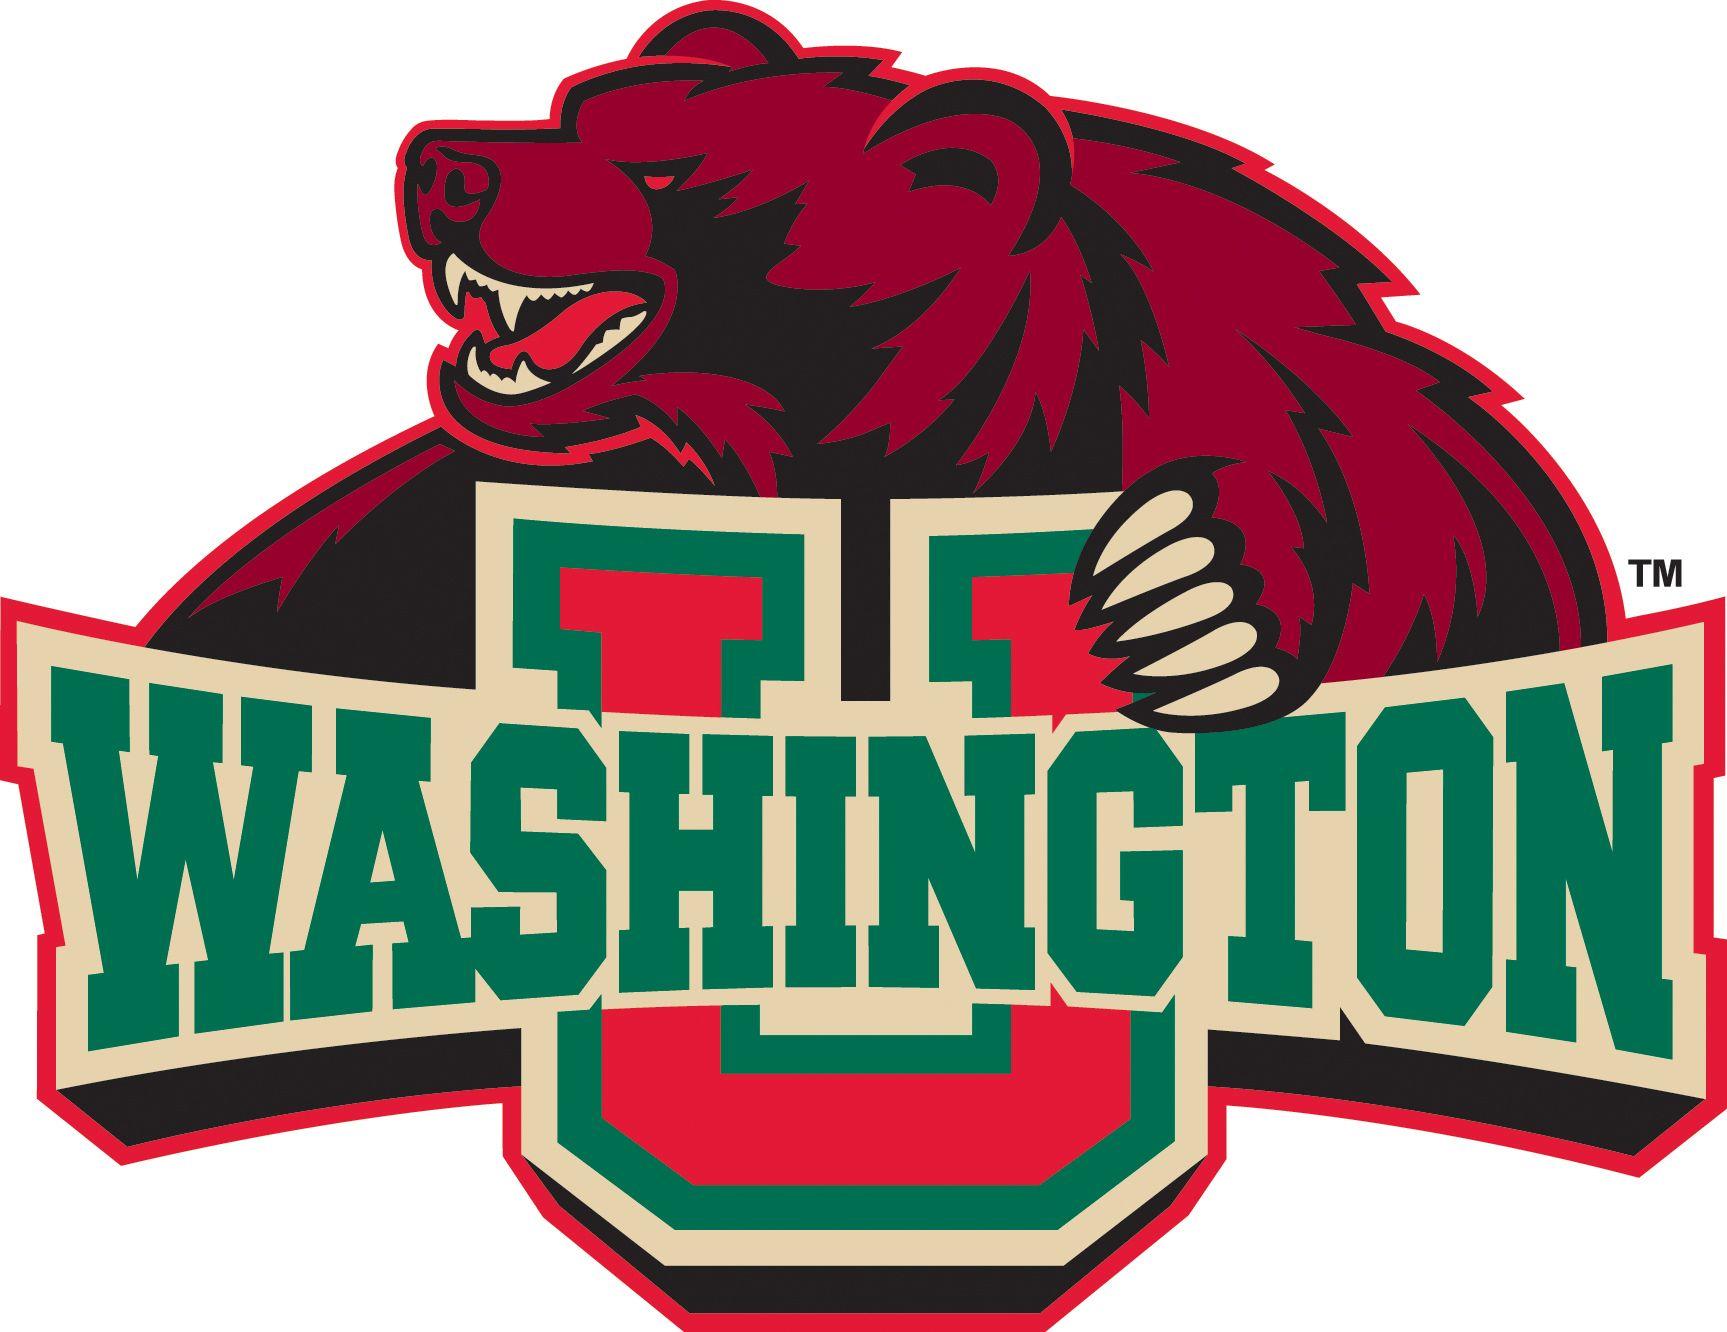 And U of U Mascot Logo - Wash U Mascot | Washington University in St. Louis | Pinterest ...